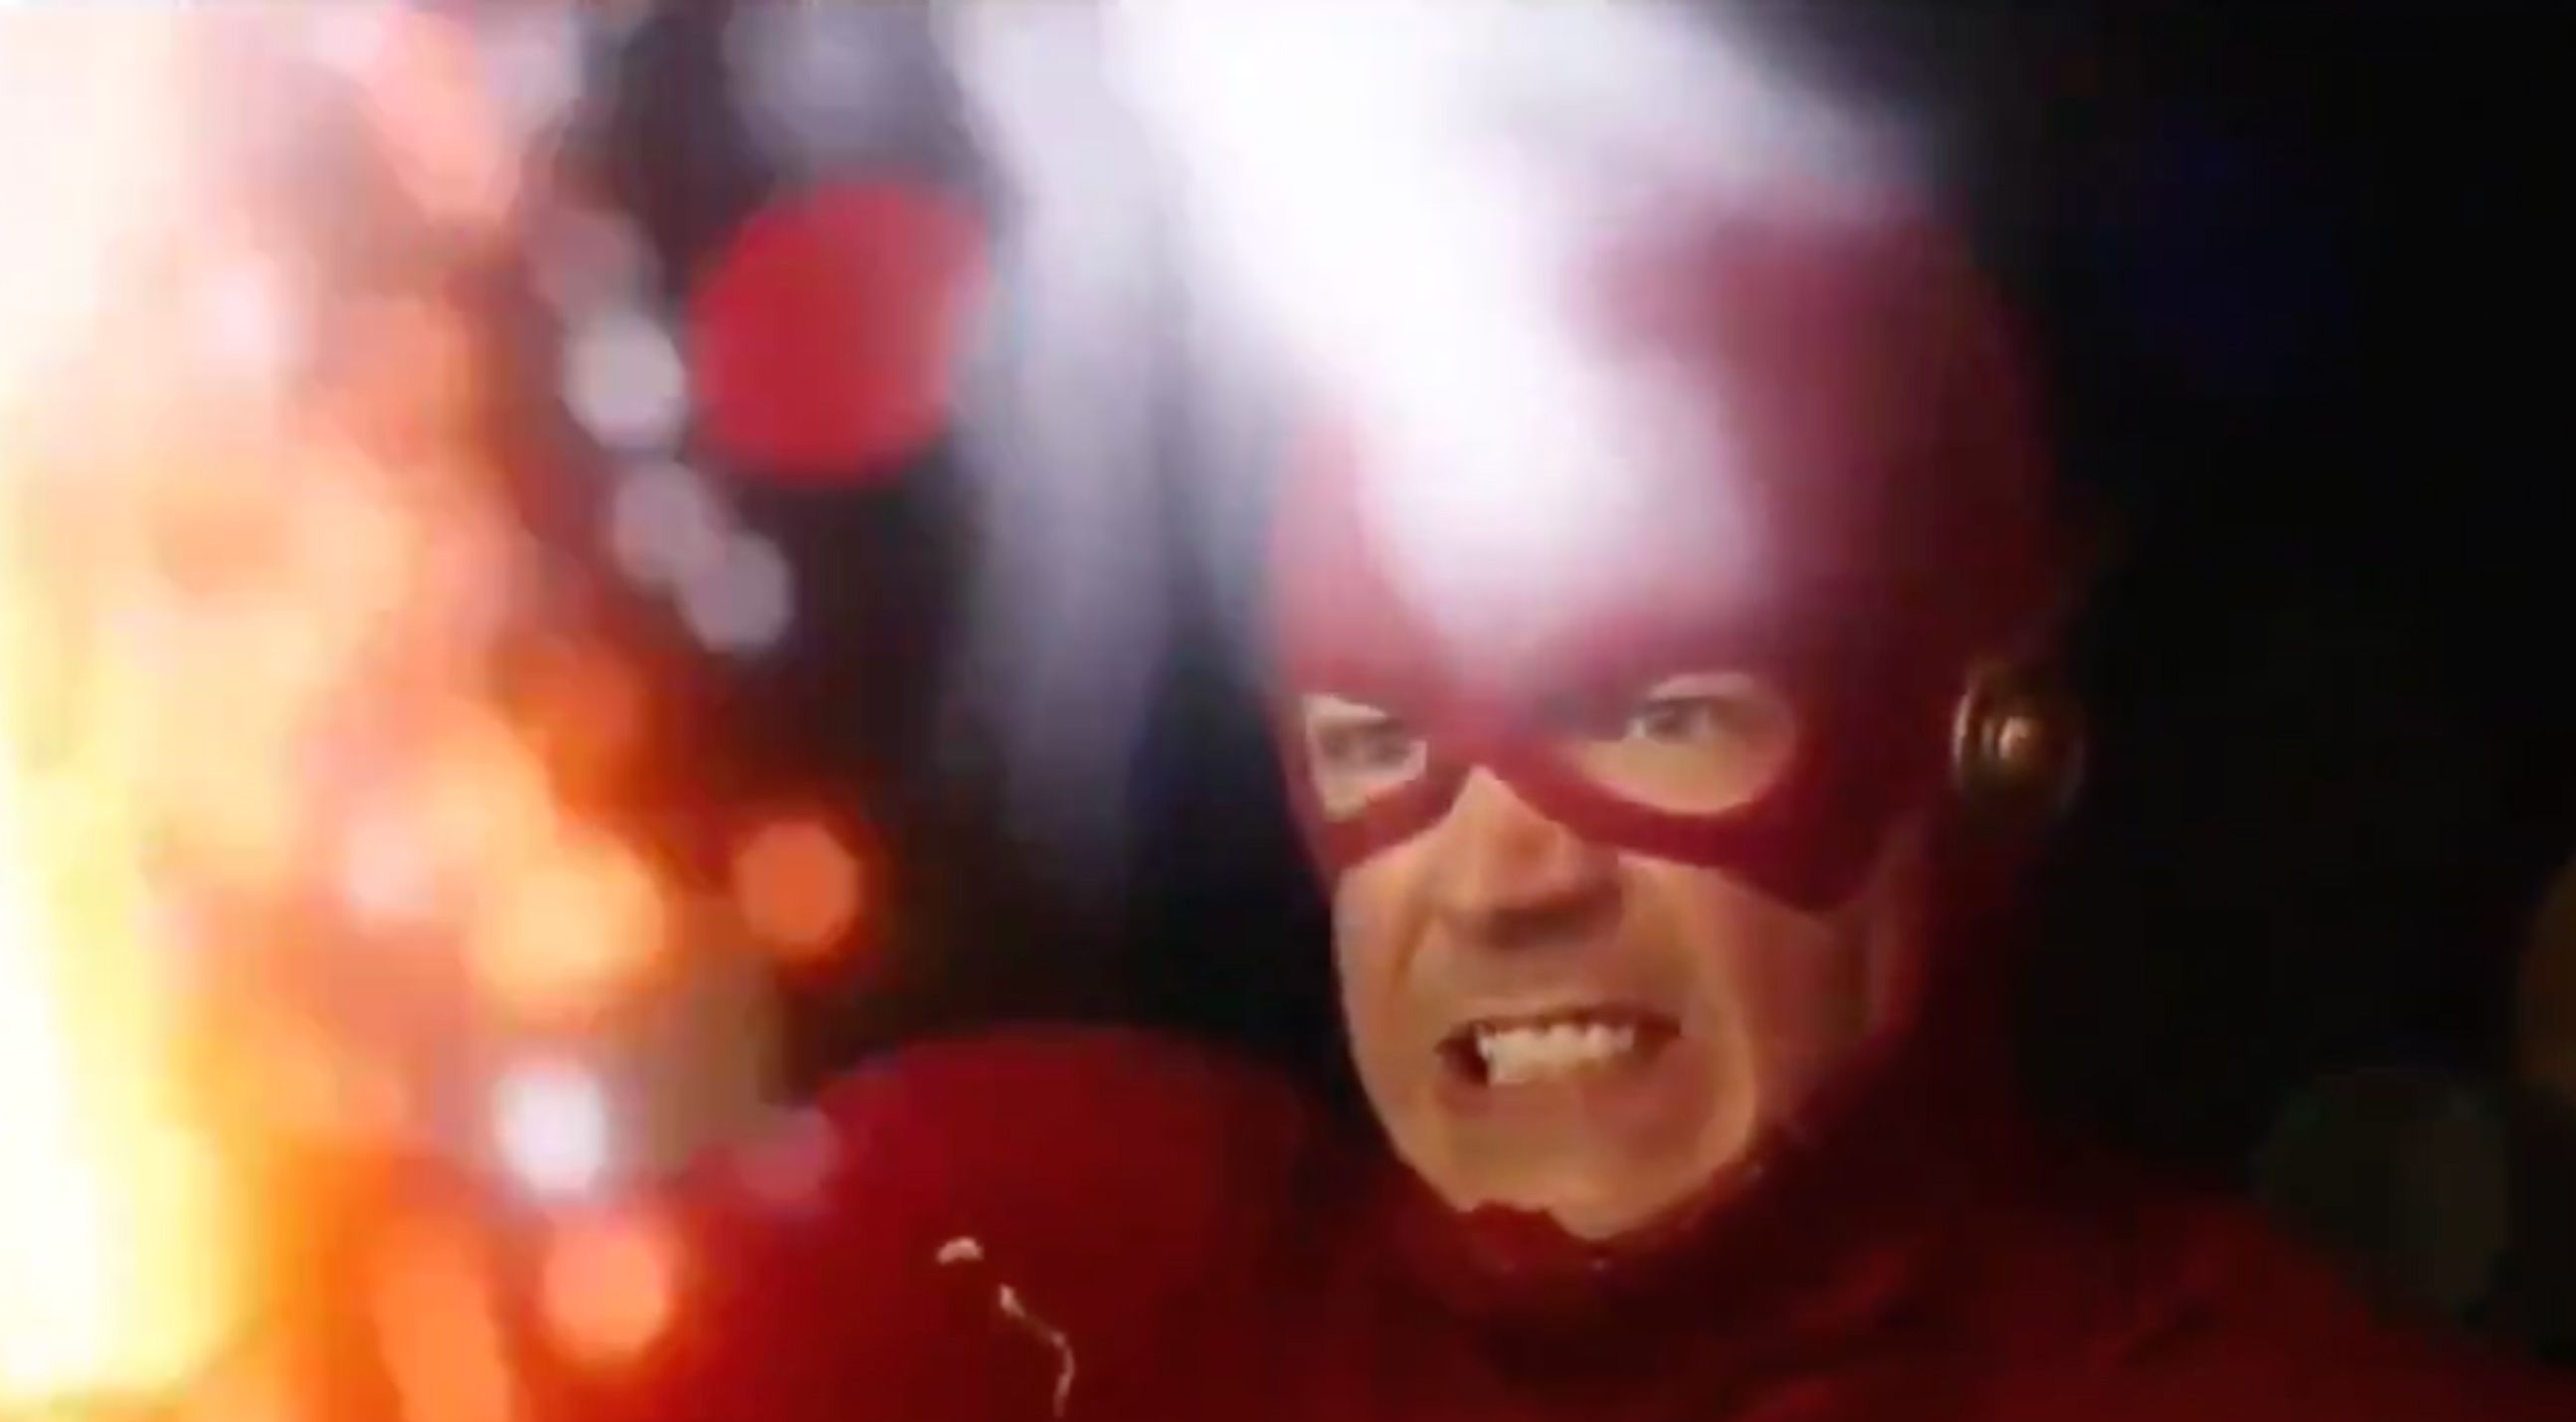 The Flash deleted scene teases major DC villain debut